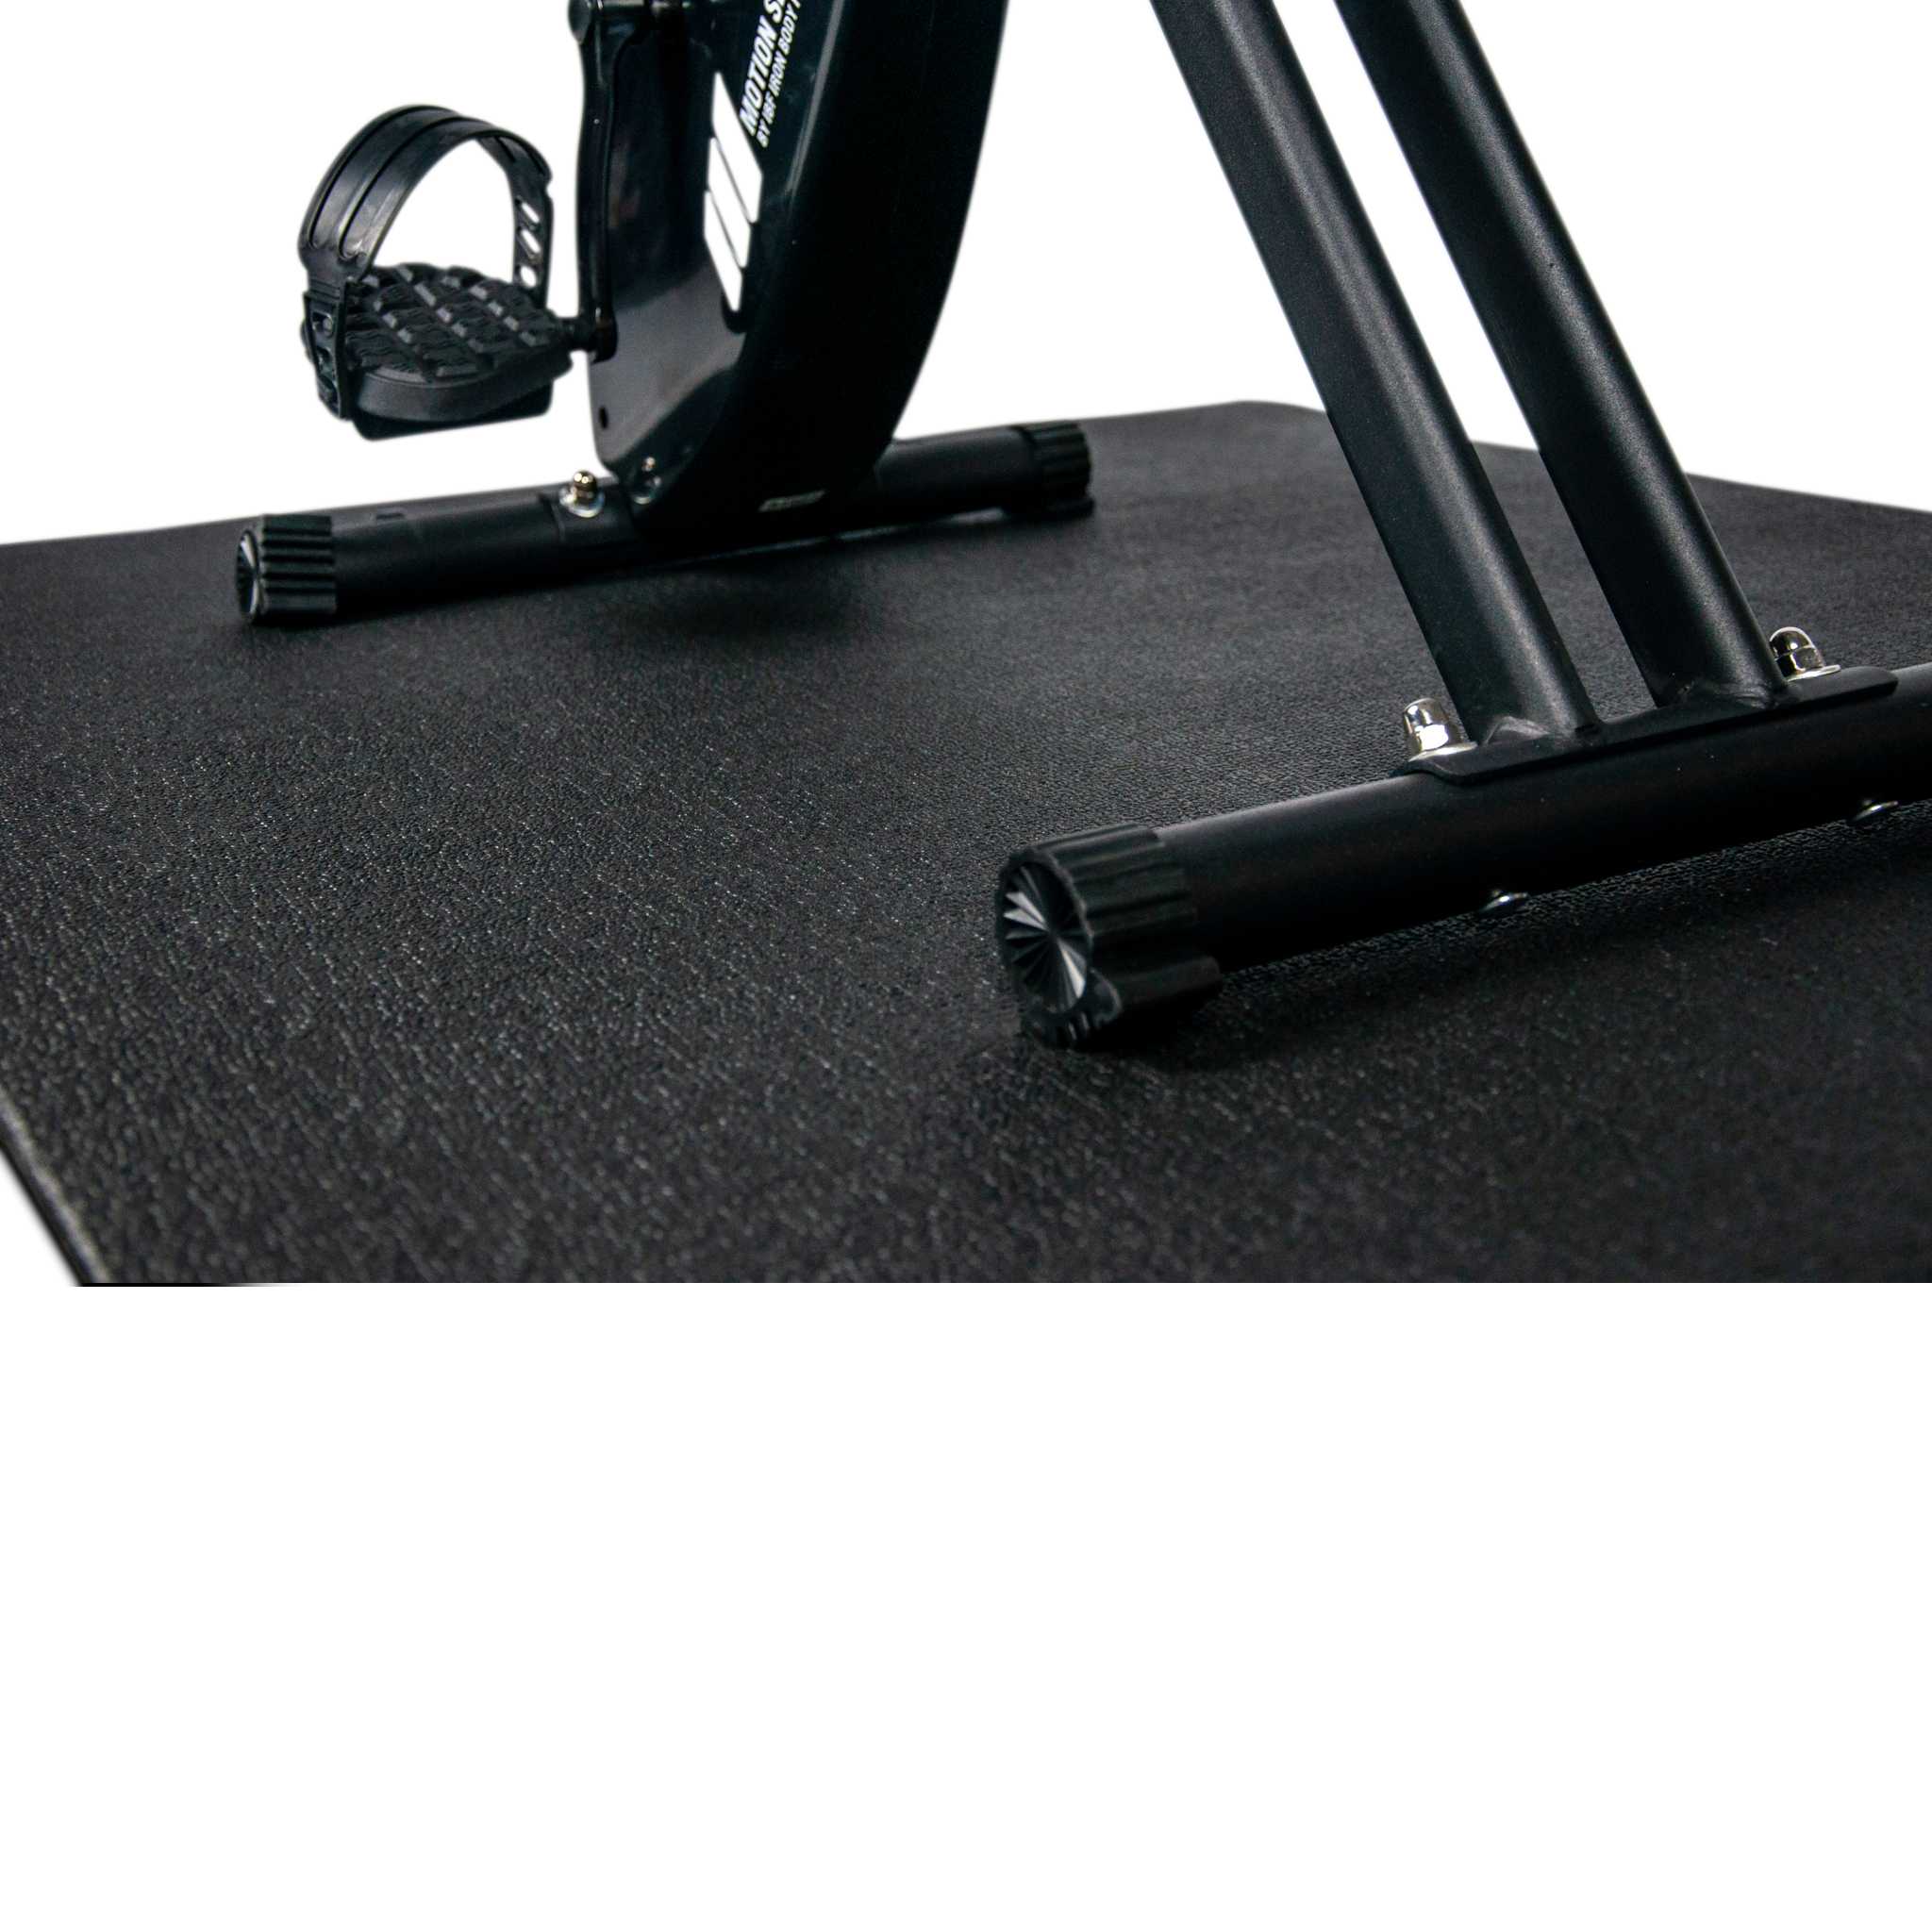 Heavy-Duty Exercise Bike Floor Mat, Cardio Equipment, Black, 4’ x 3’